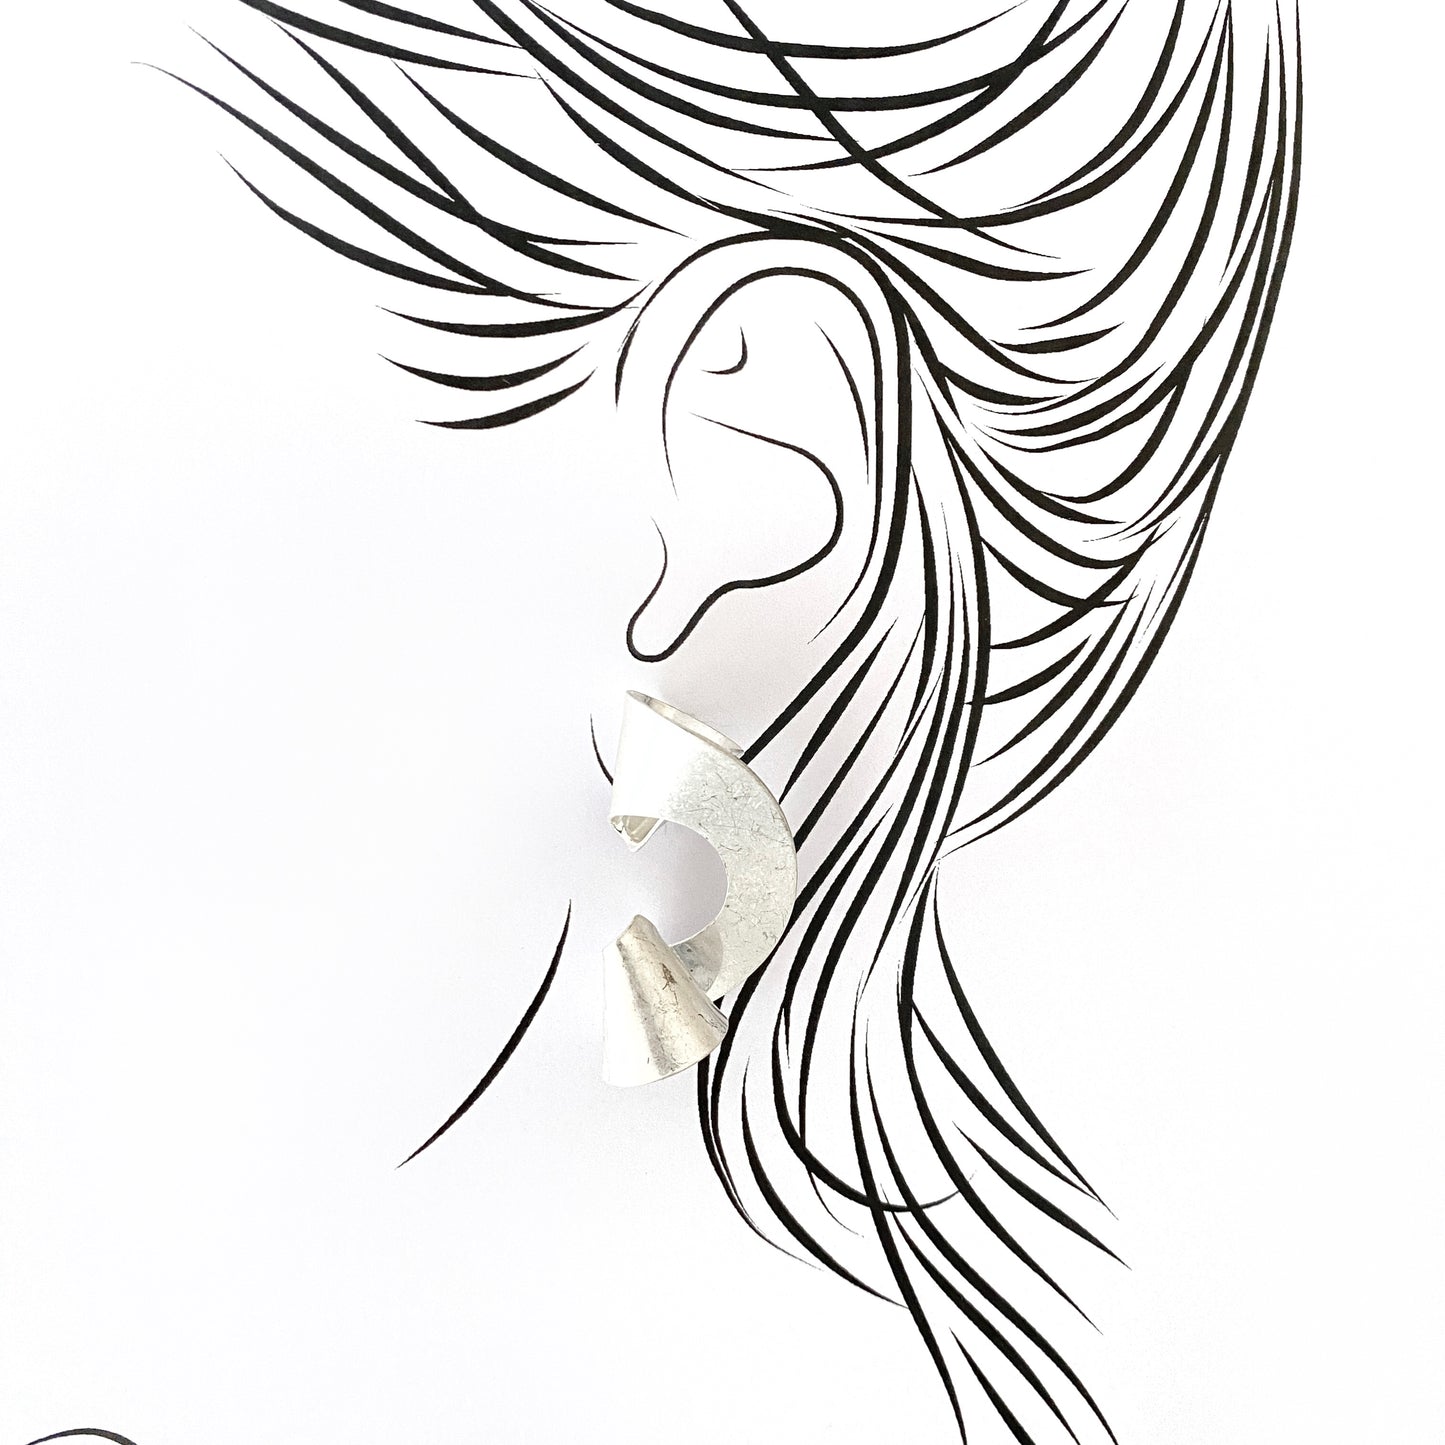 Geometric spiral earrings Sonata (Spain)